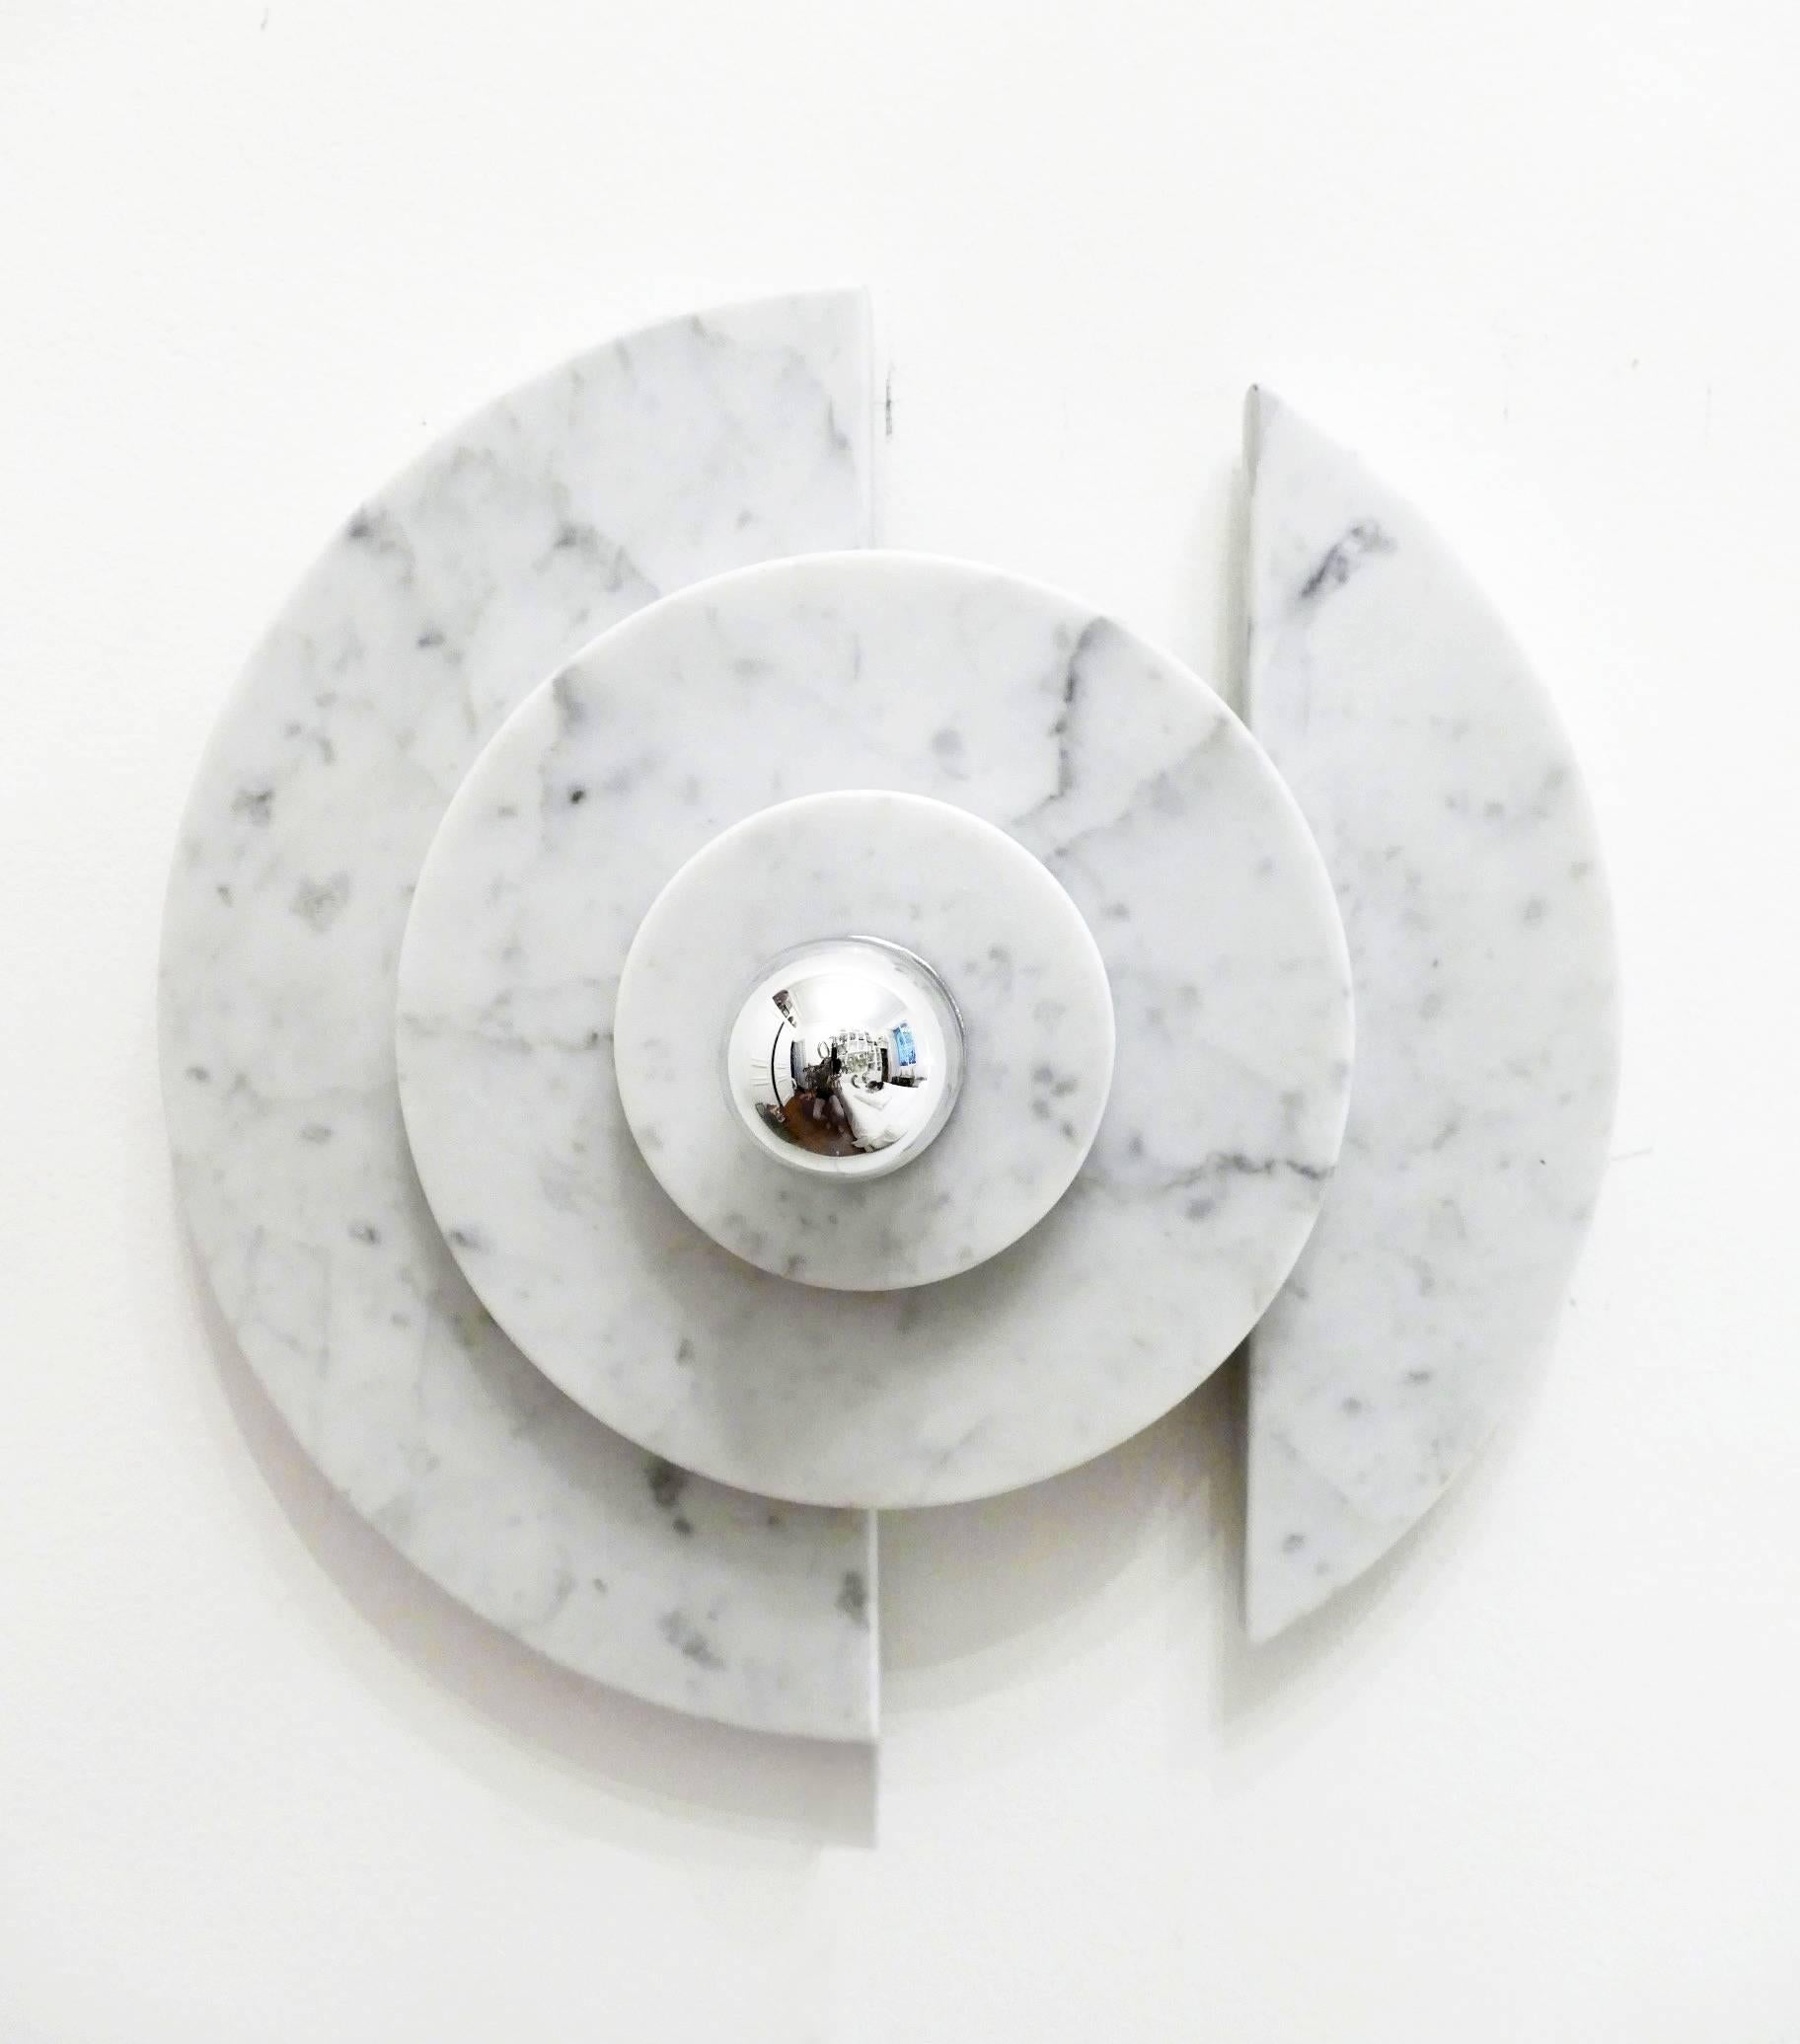 Lea Ginac, pair of sconces,
marble,
circa 2000, France.
Measures: Diameter 31 cm.